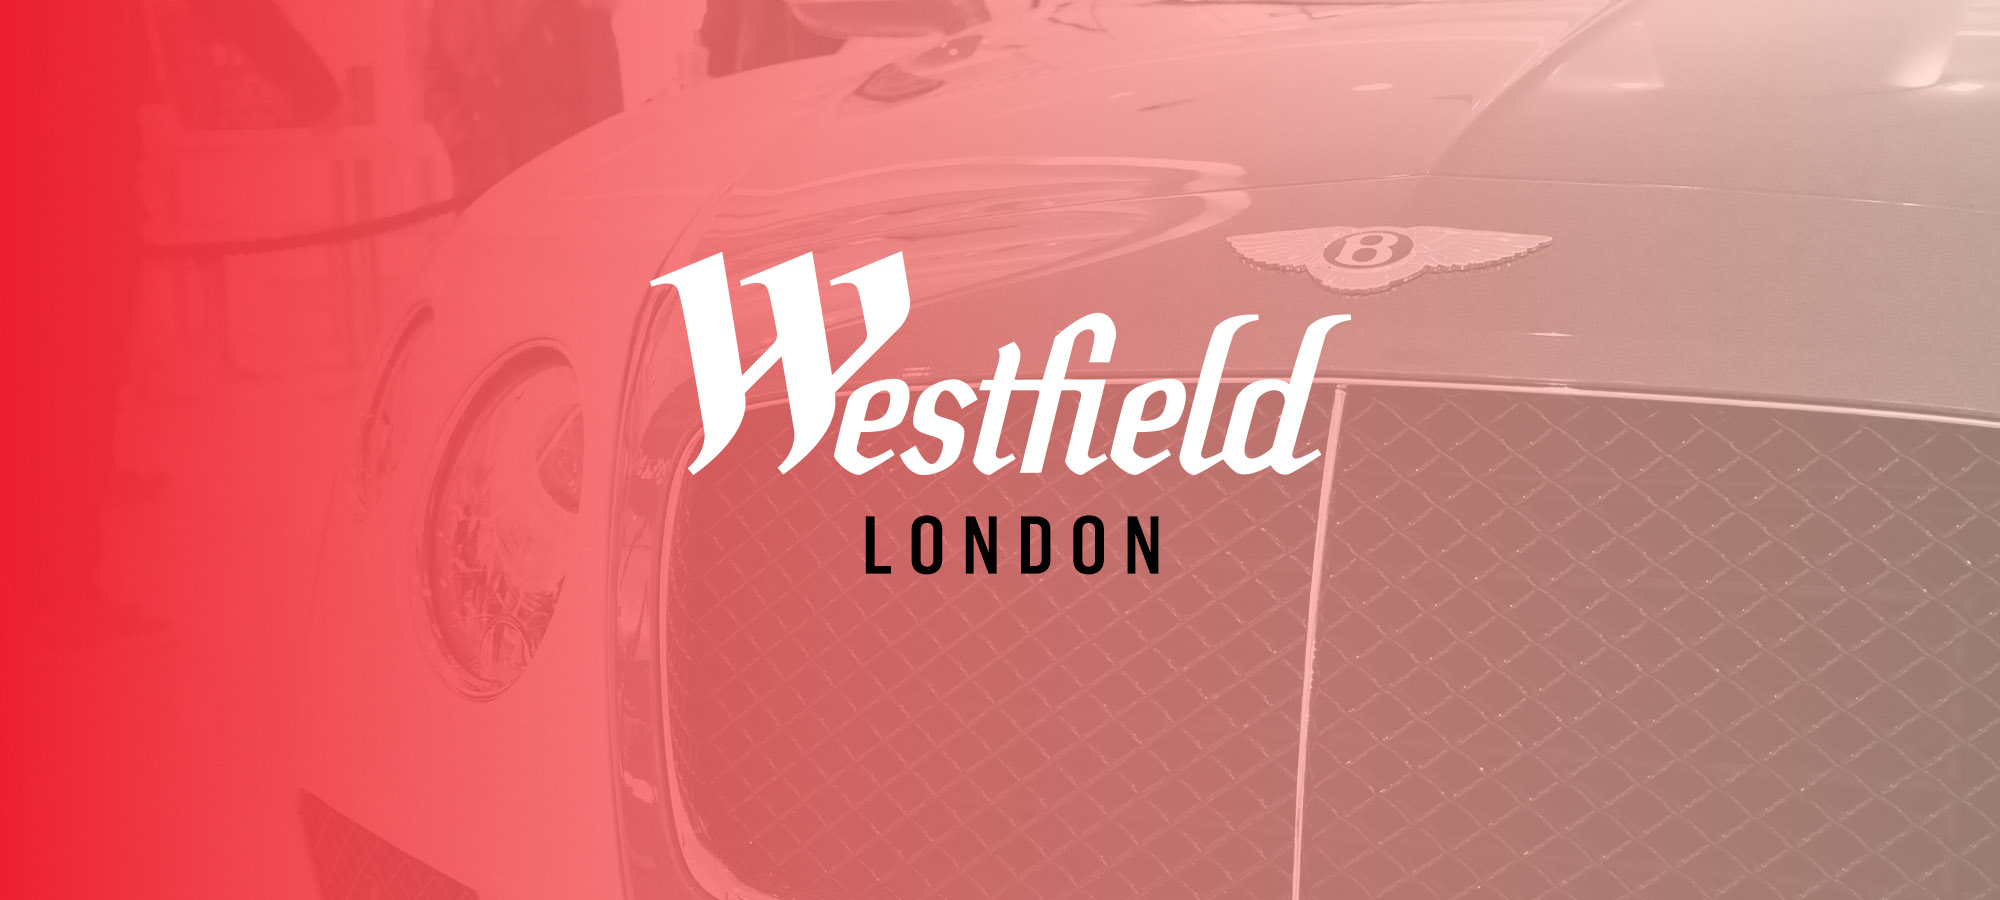 Westfield Shopping Centre, London - Audas